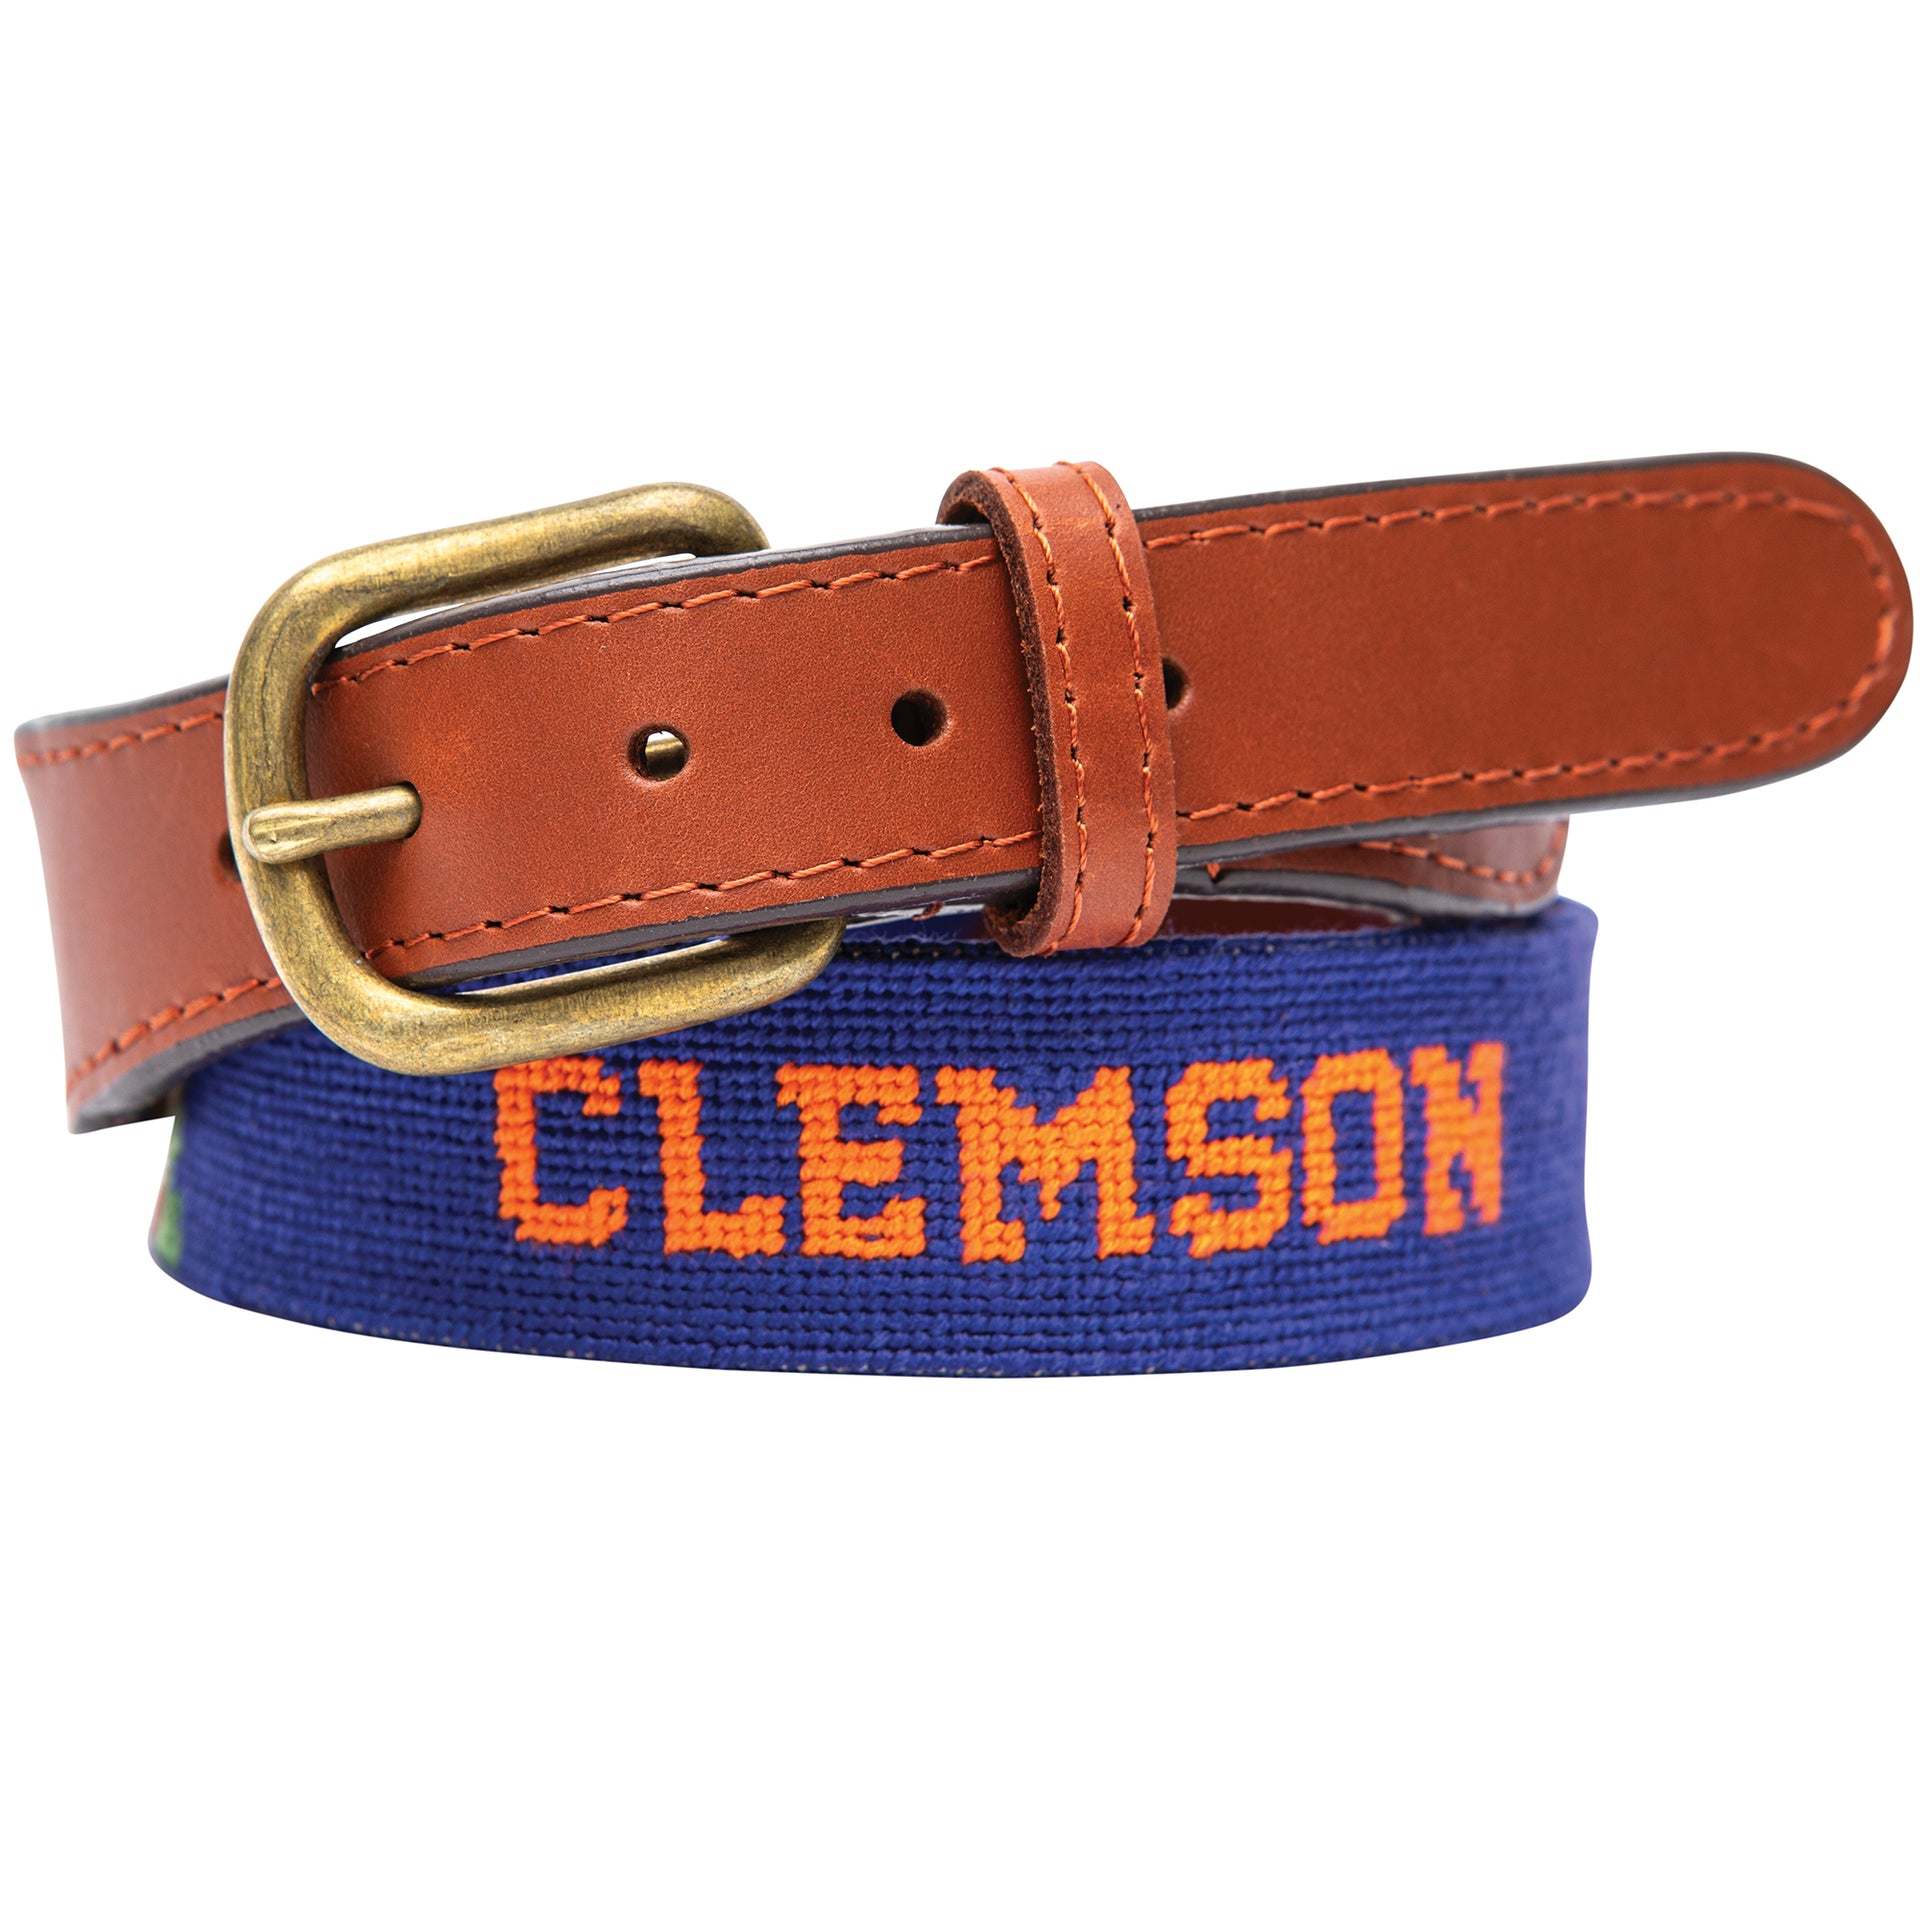 Clemson Text (Orange) Needlepoint Belt